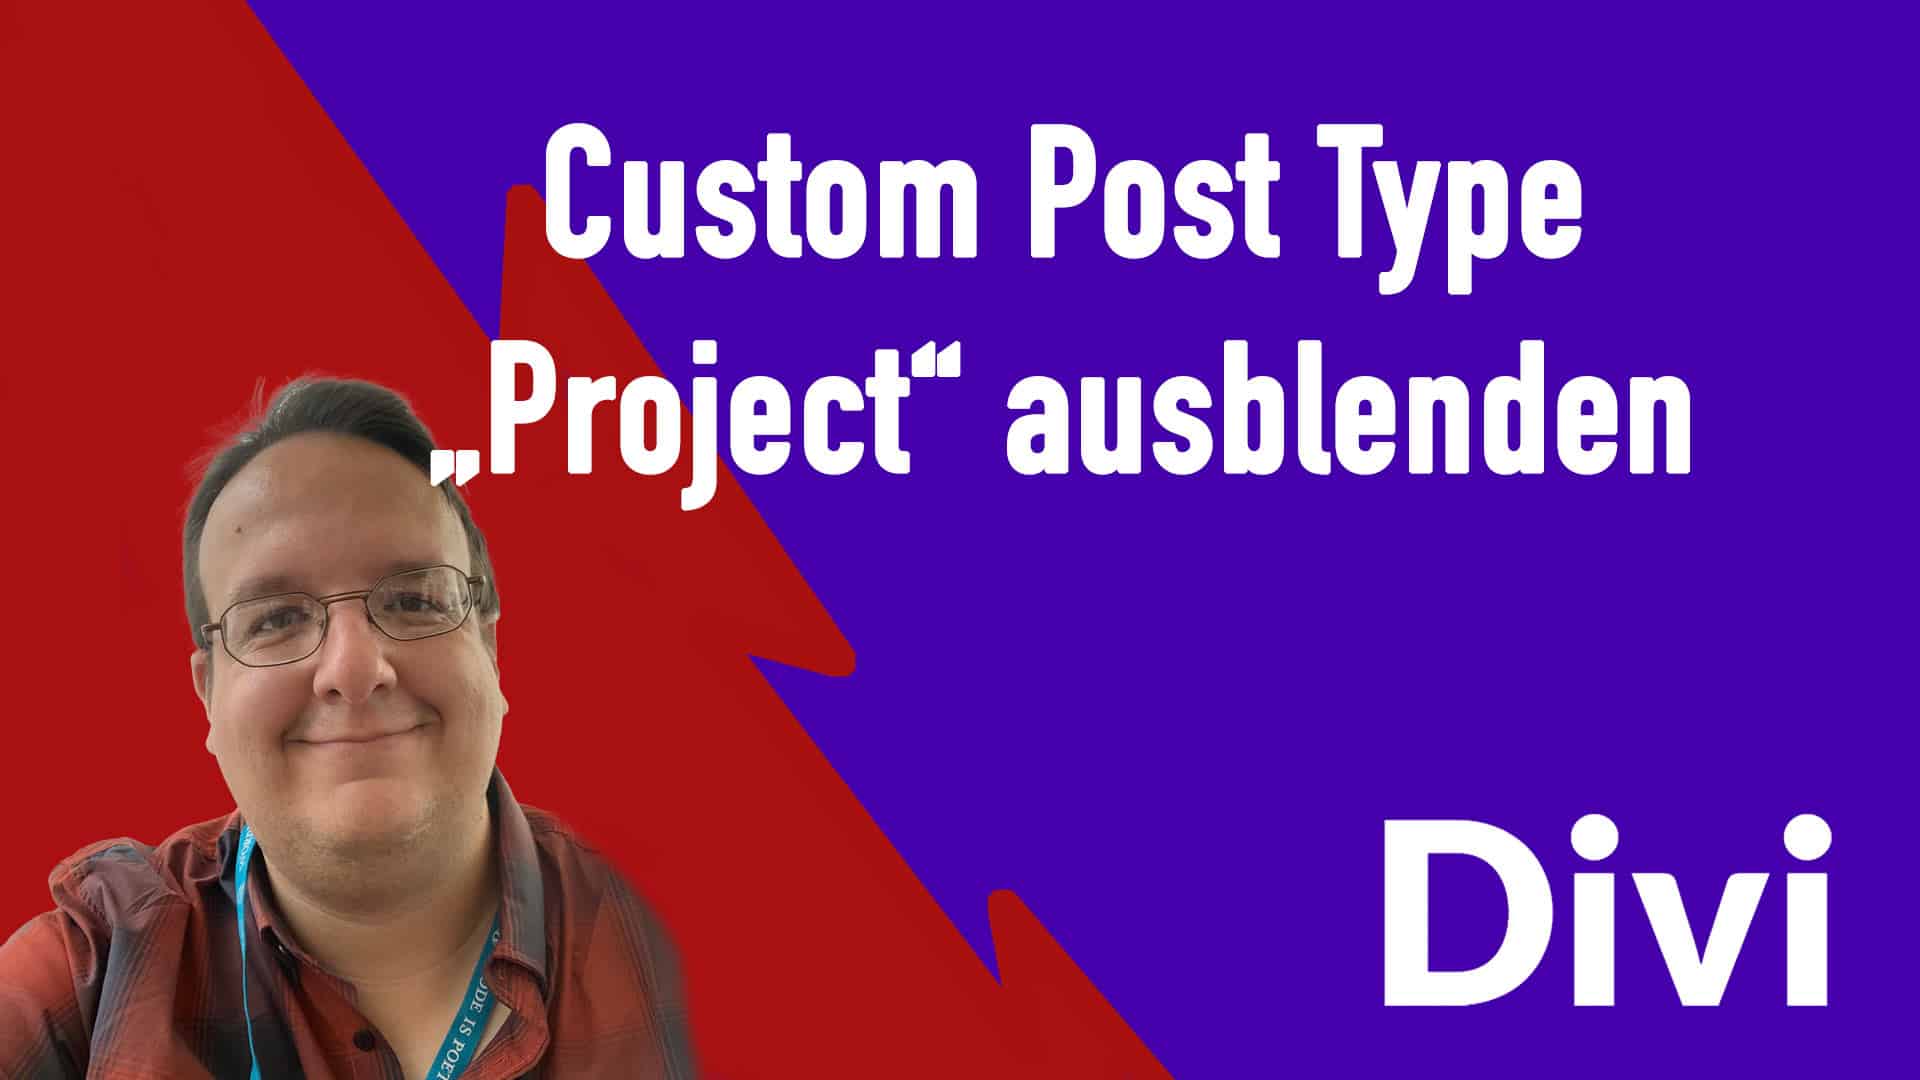 DIVI: Project Custom Posttype ausblenden